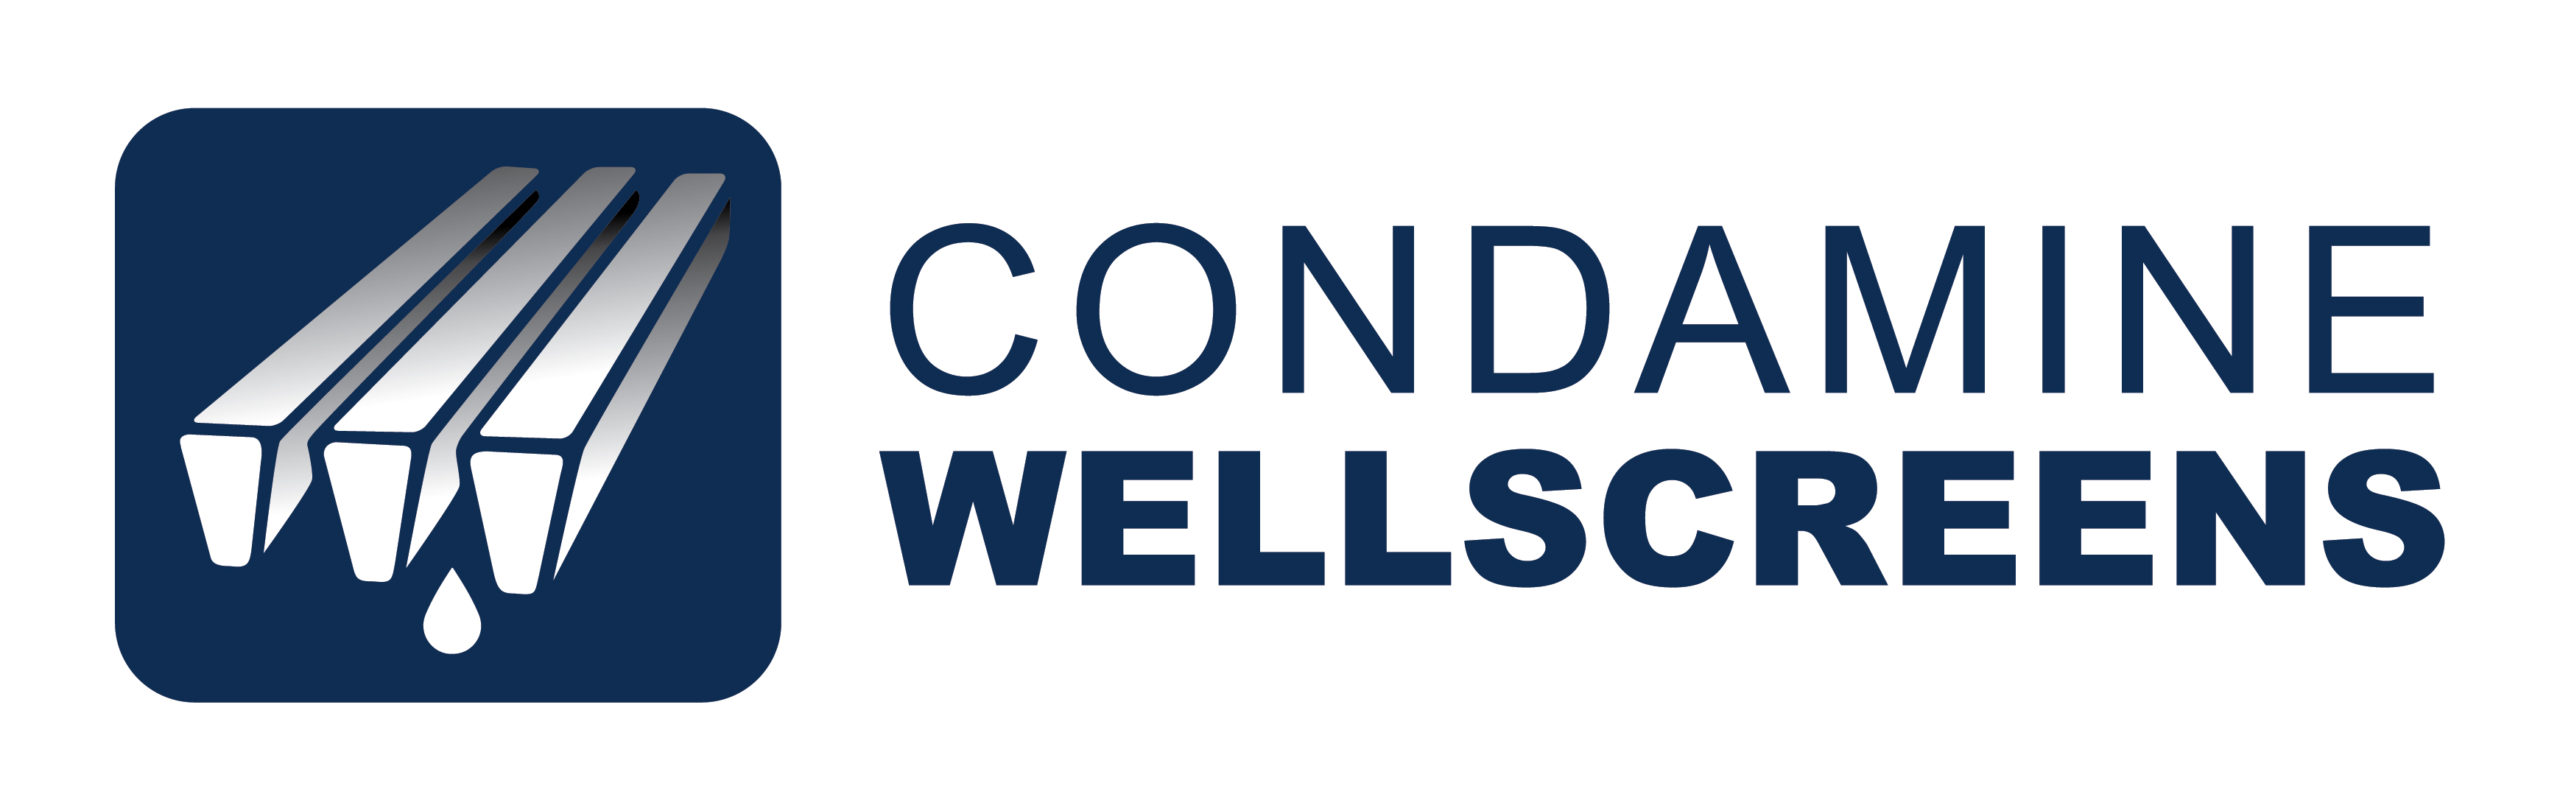 Condamine Wellscreens Pty Ltd